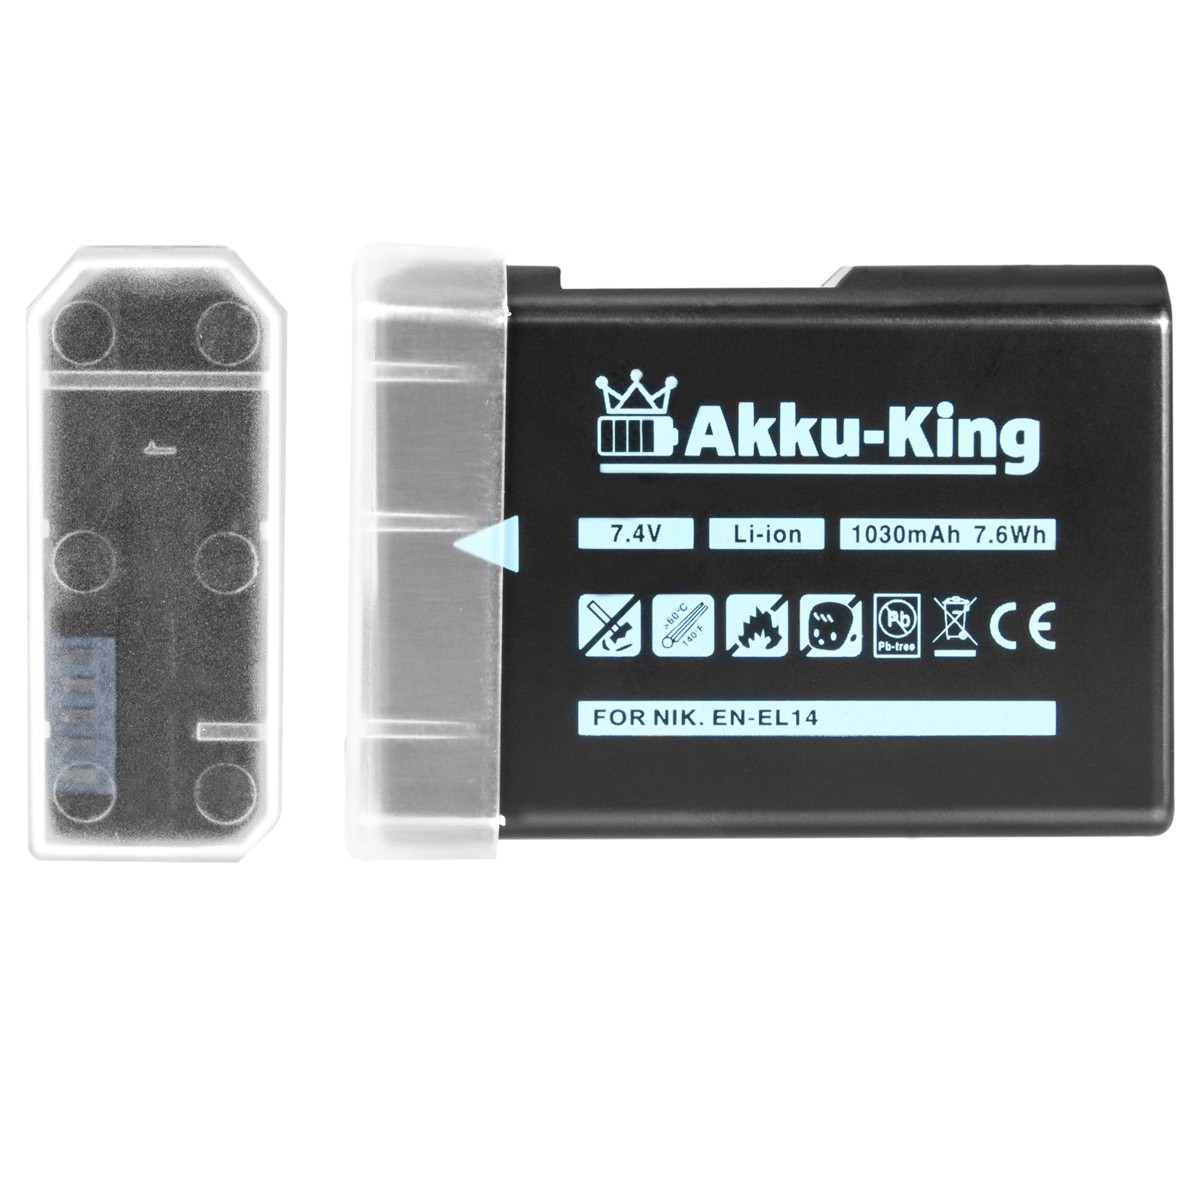 1030mAh Li-Ion Nikon AKKU-KING Kamera-Akku, Volt, Akku mit 7.4 EN-EL14 kompatibel